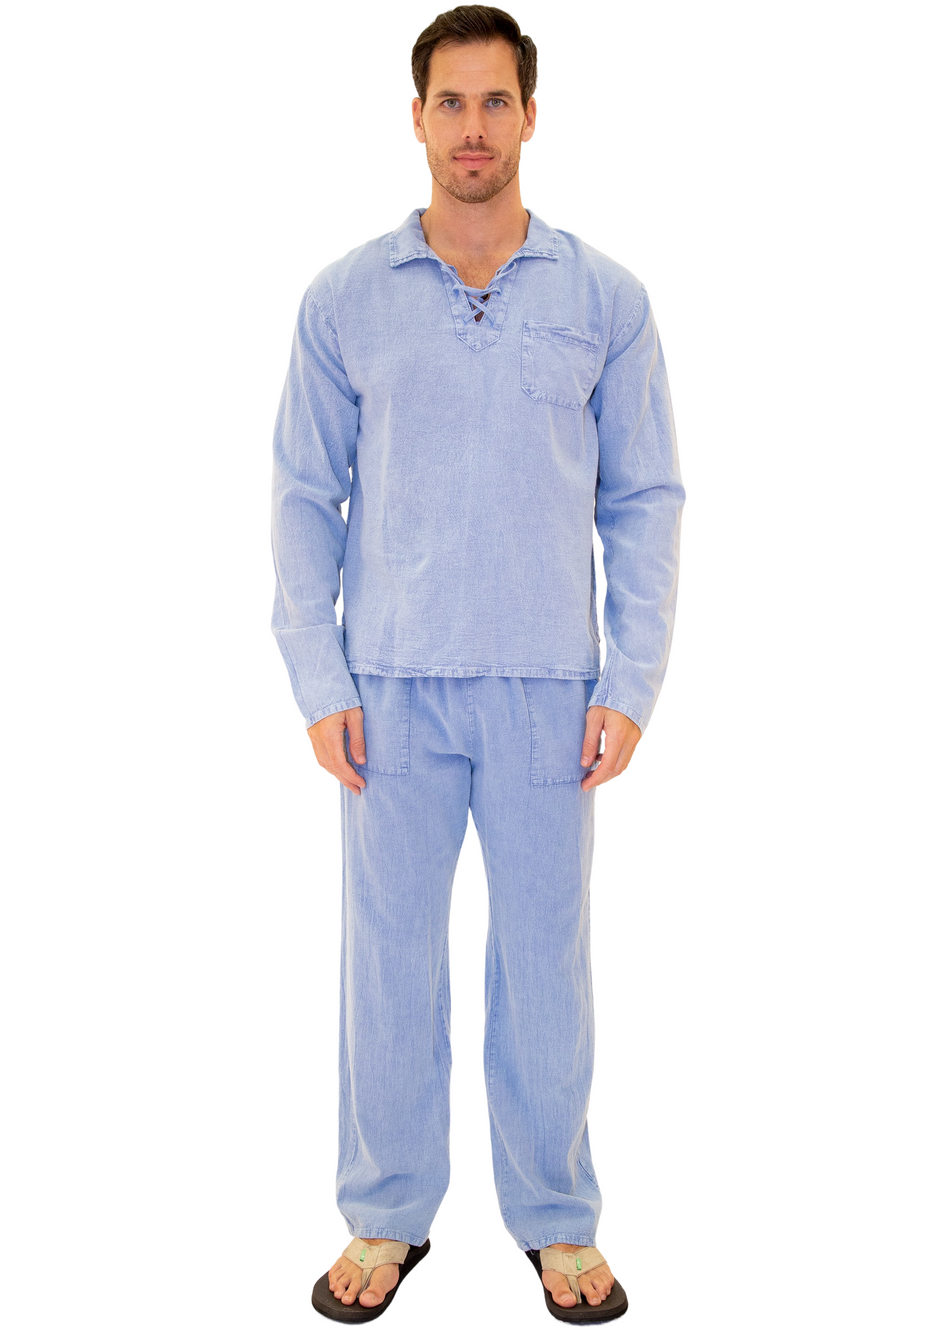 GZ1015 - Blue Cotton Drawstring Pocket Long Sleeves Shirt